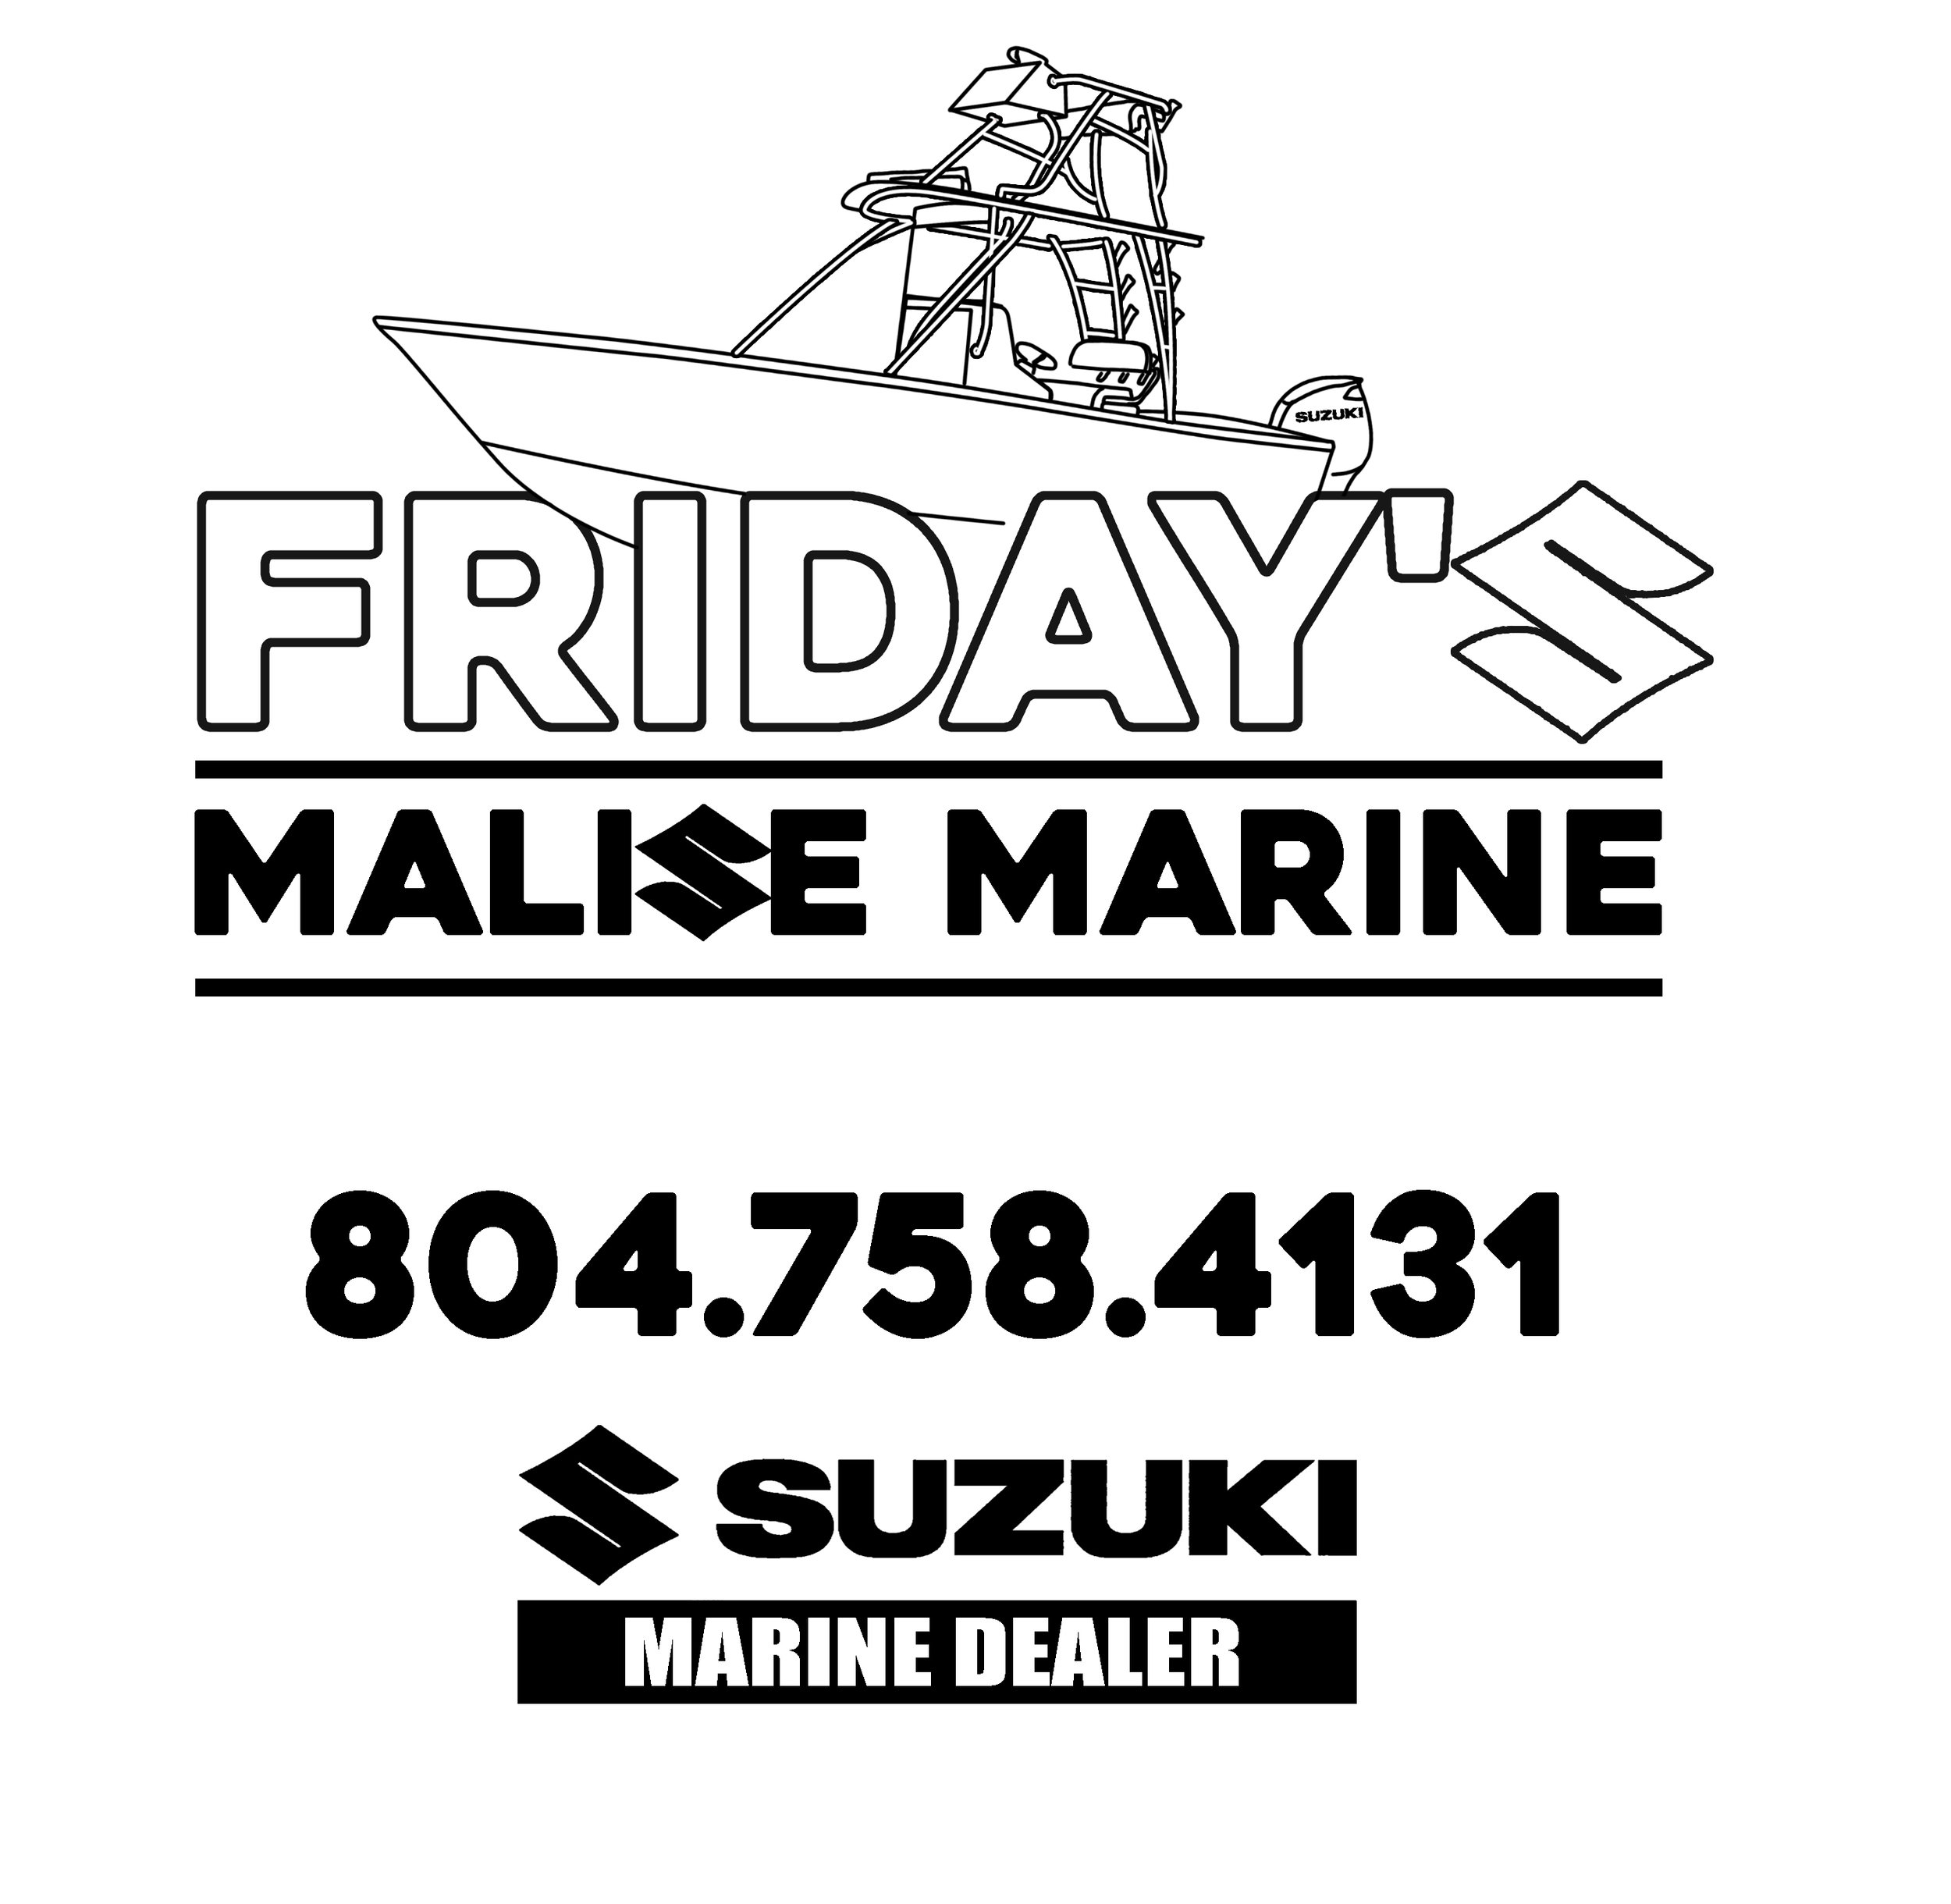 Fridays marine logo concept.jpg